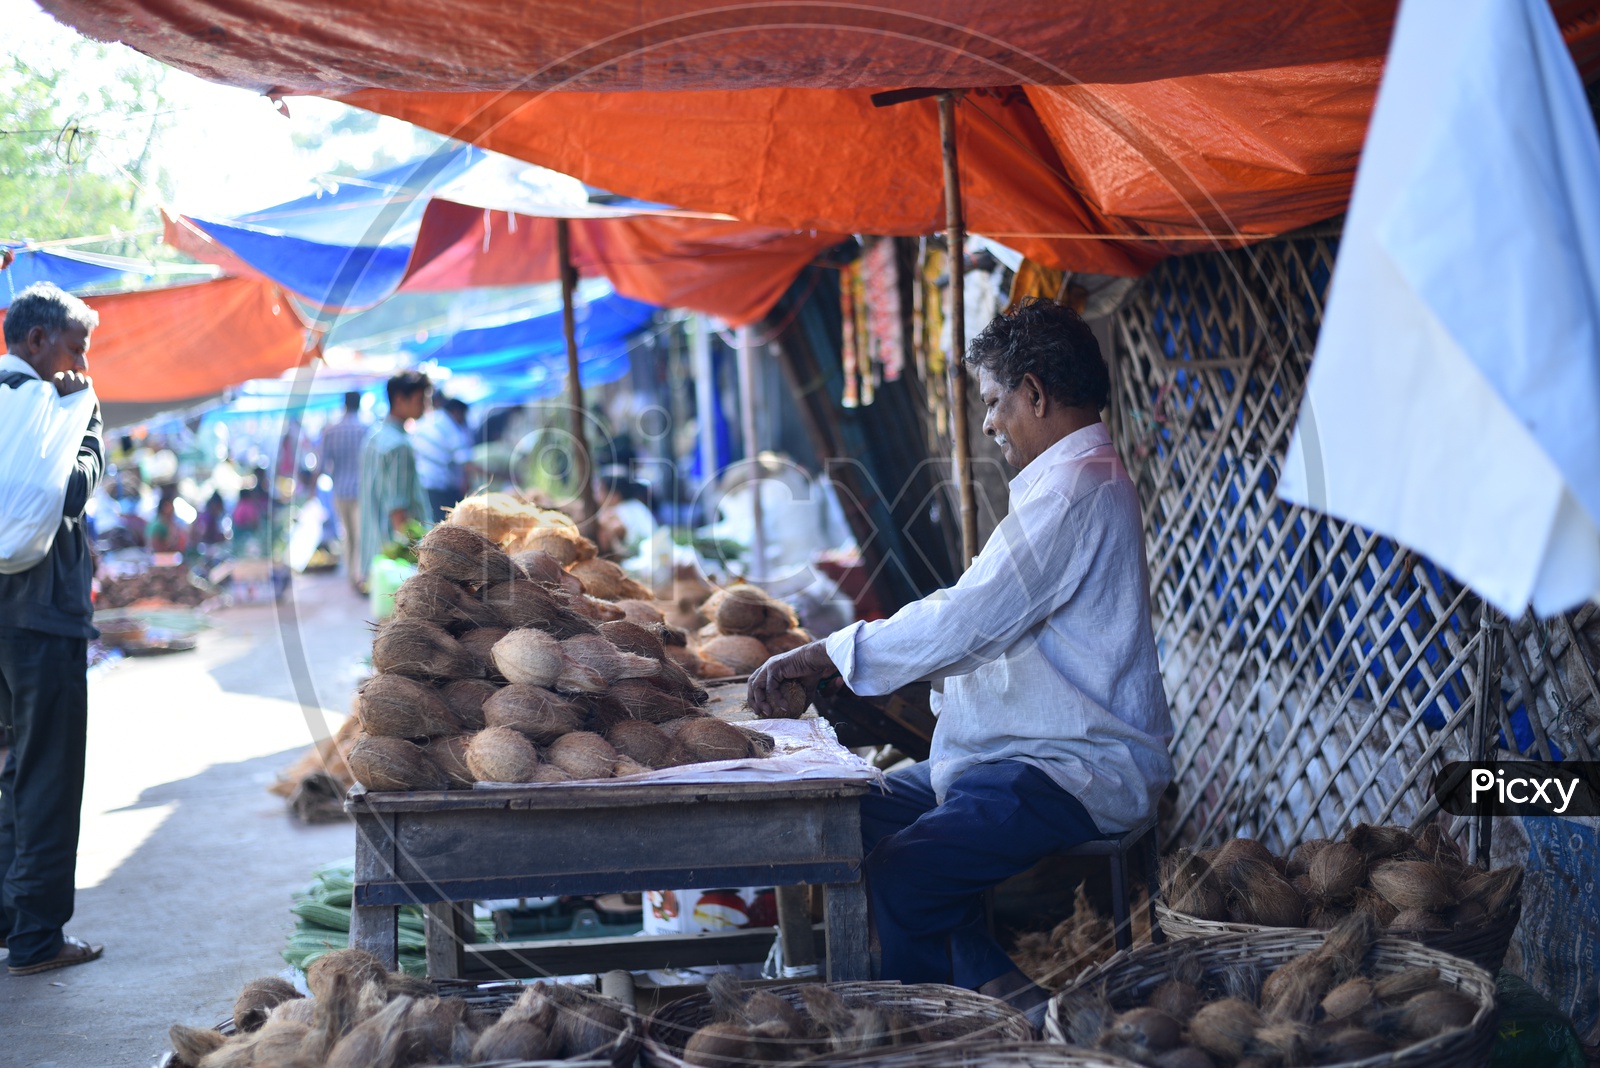 Coconut Seller at Local Vegetable Market/Rythu Bazar